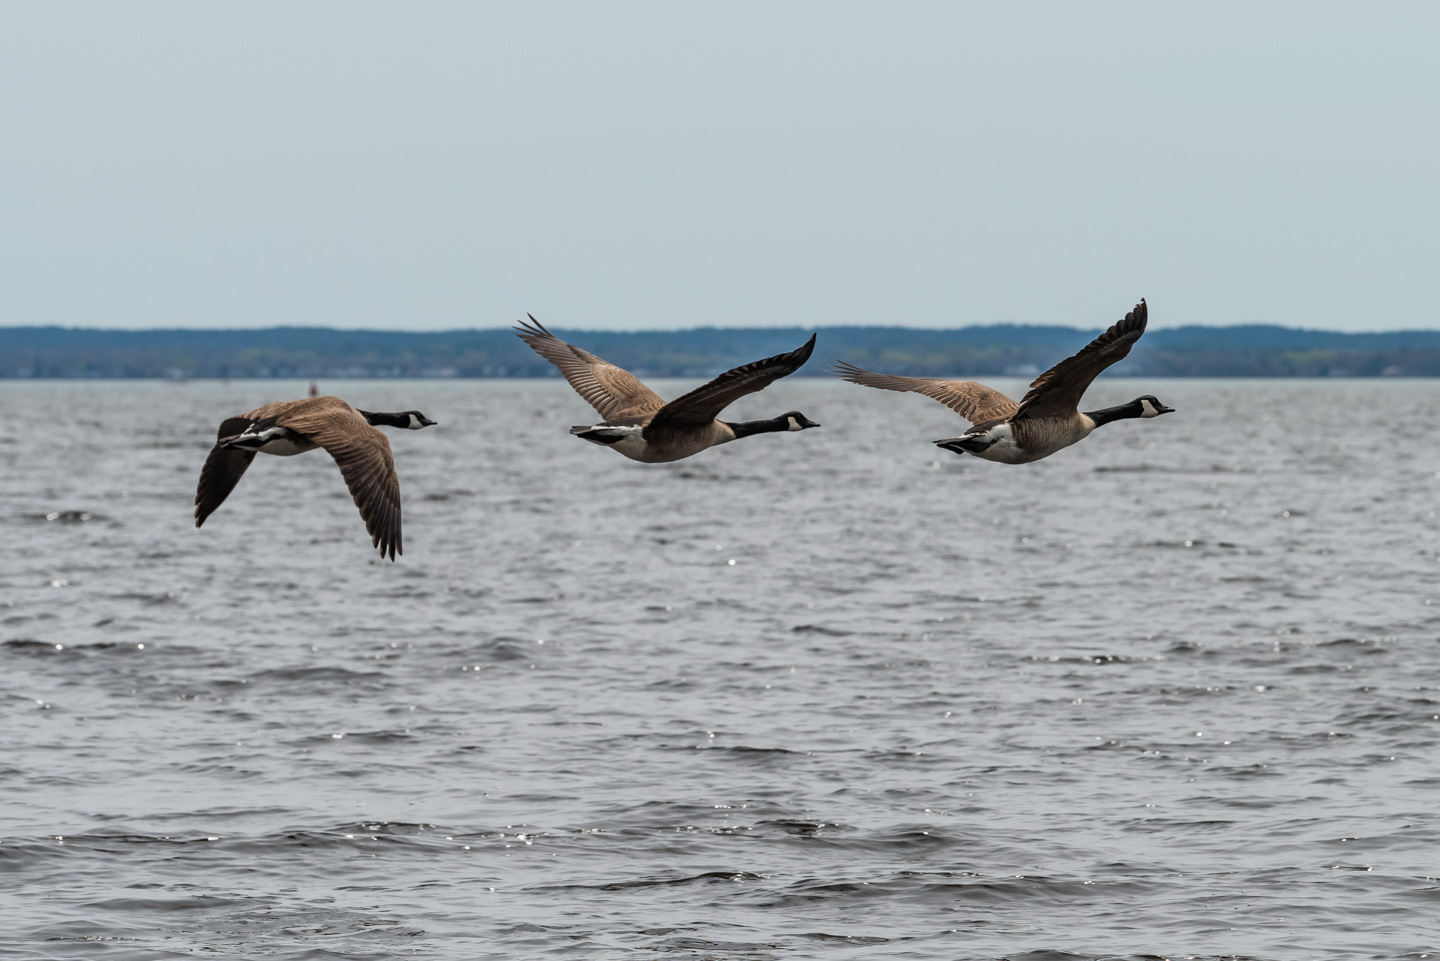 Three Canada Geese in flight